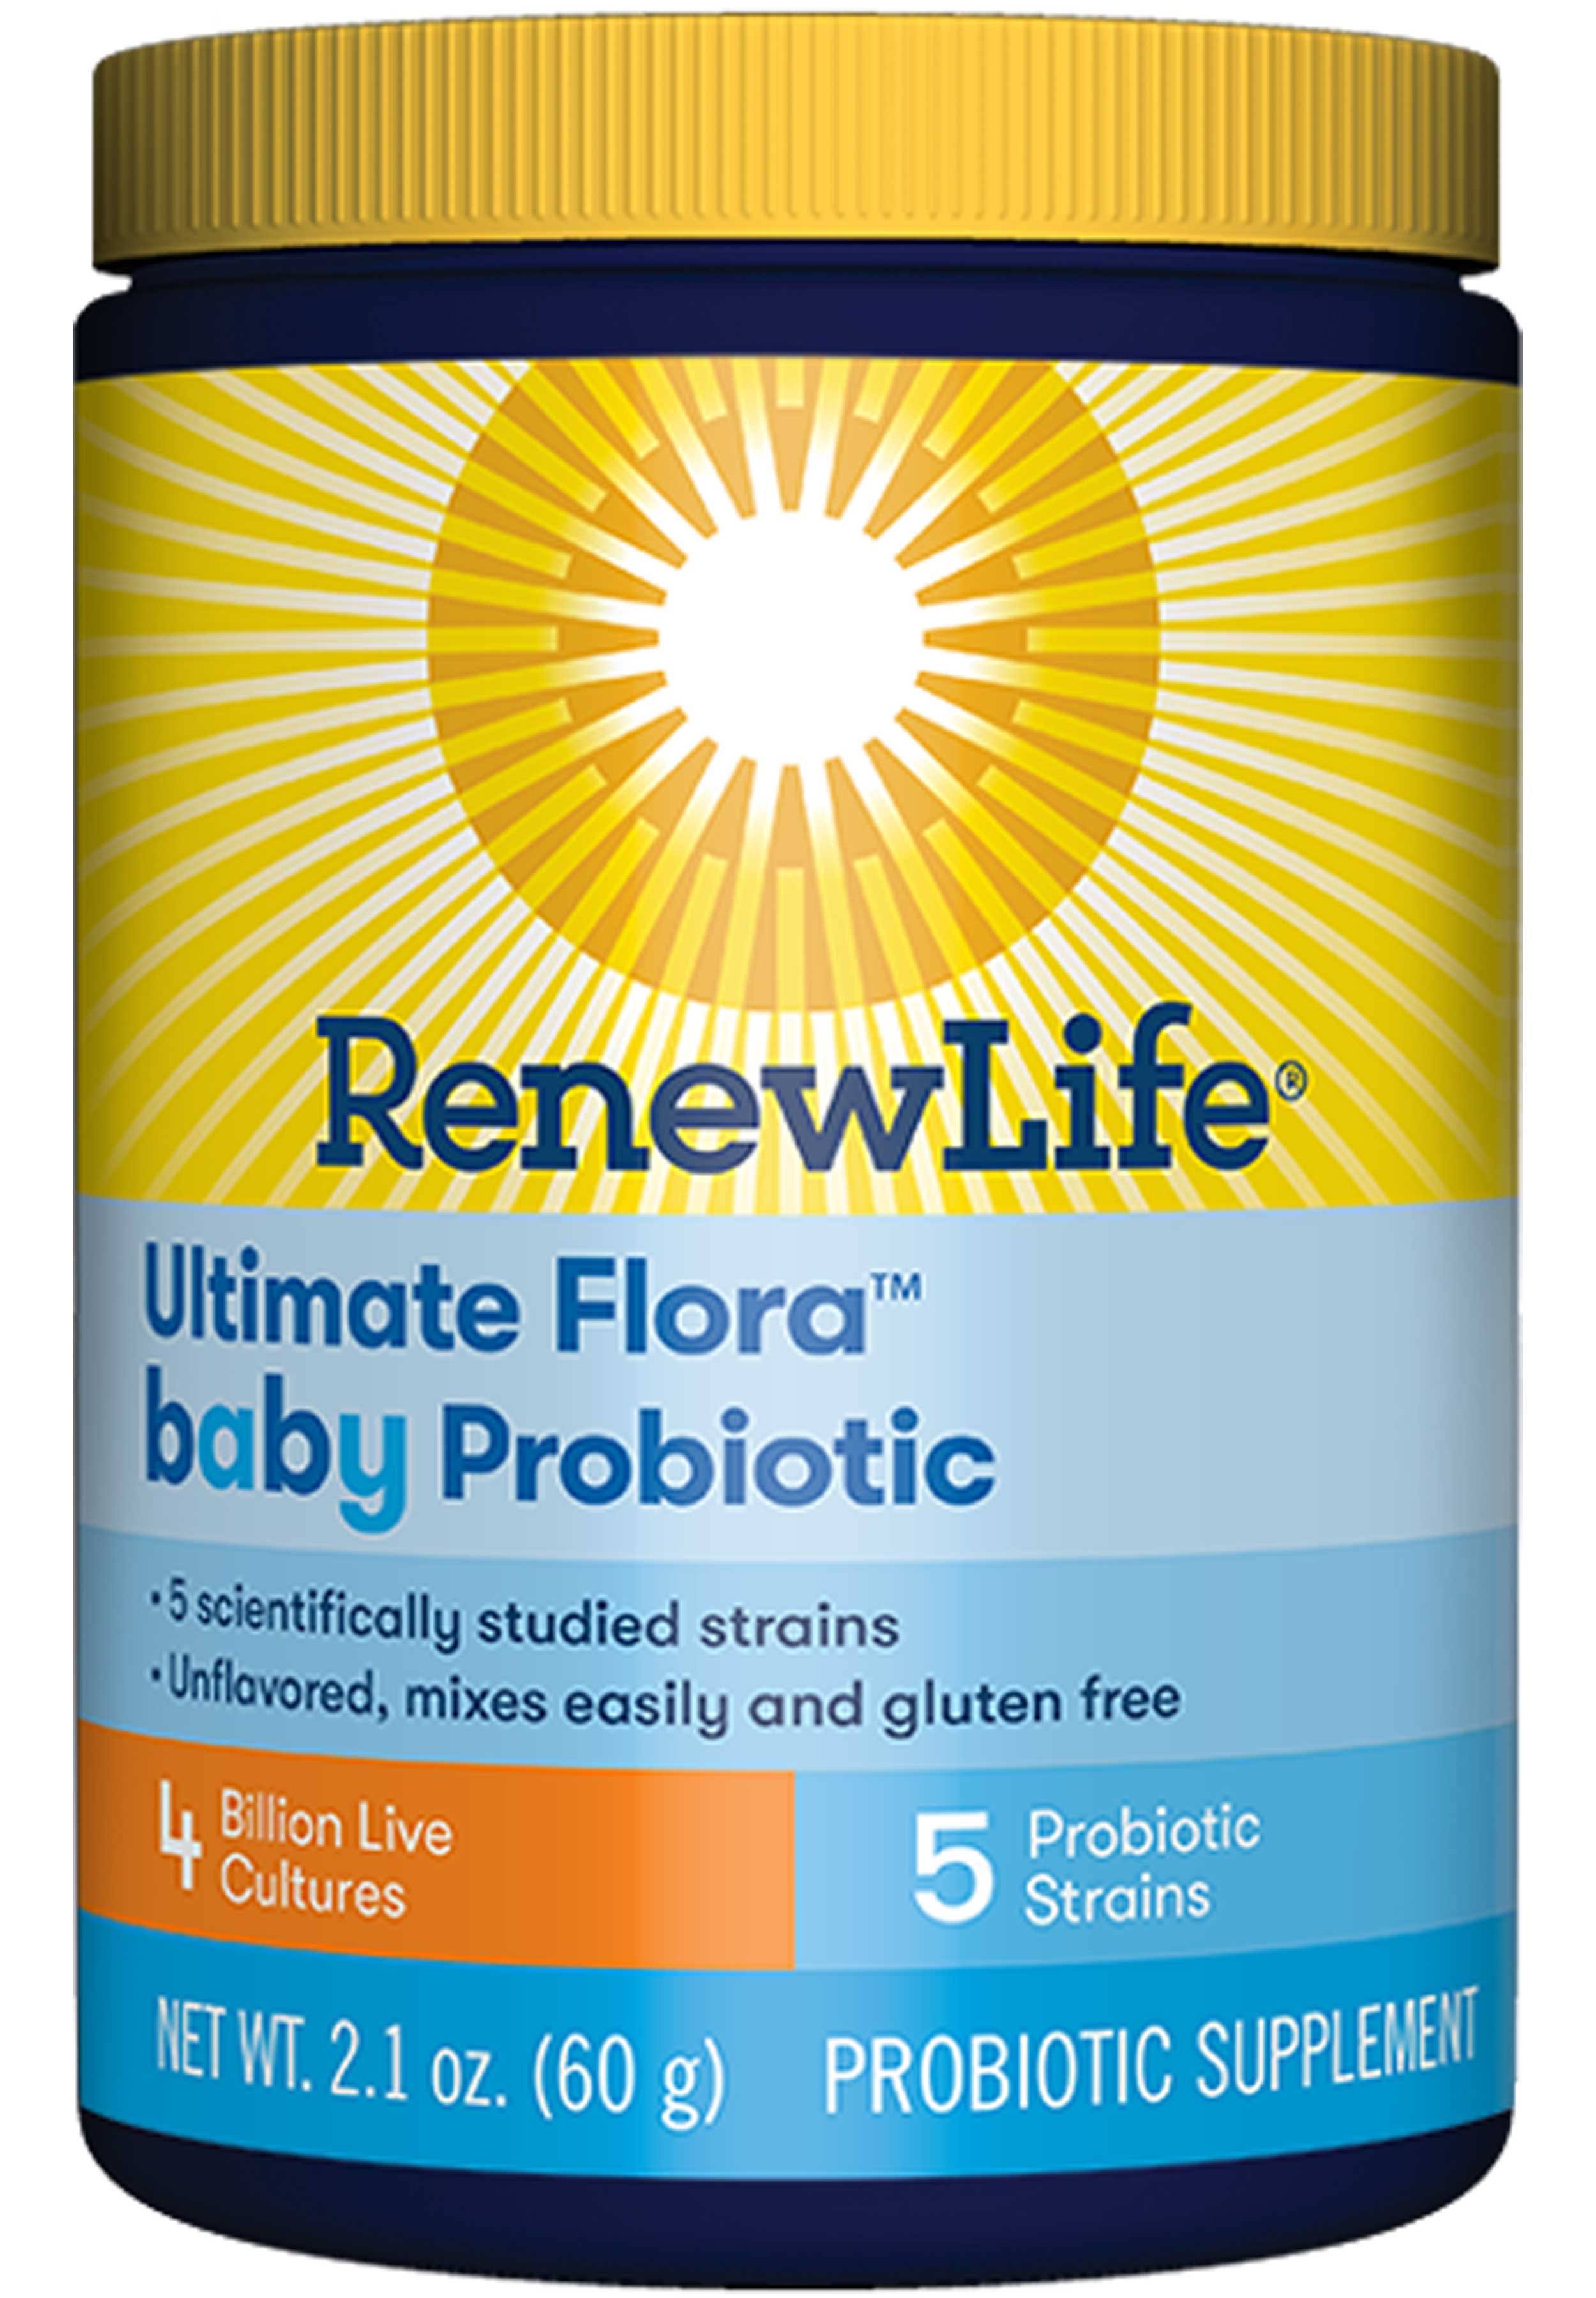 ReNew Life Flora Baby Advanced Probiotic Formula - 60g